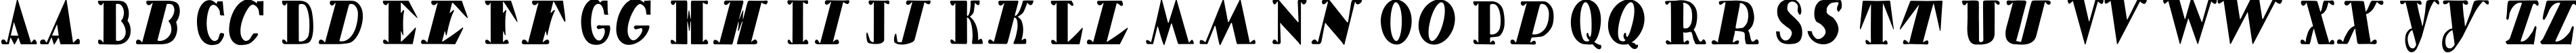 Пример написания английского алфавита шрифтом 1920Cnd TYGRA